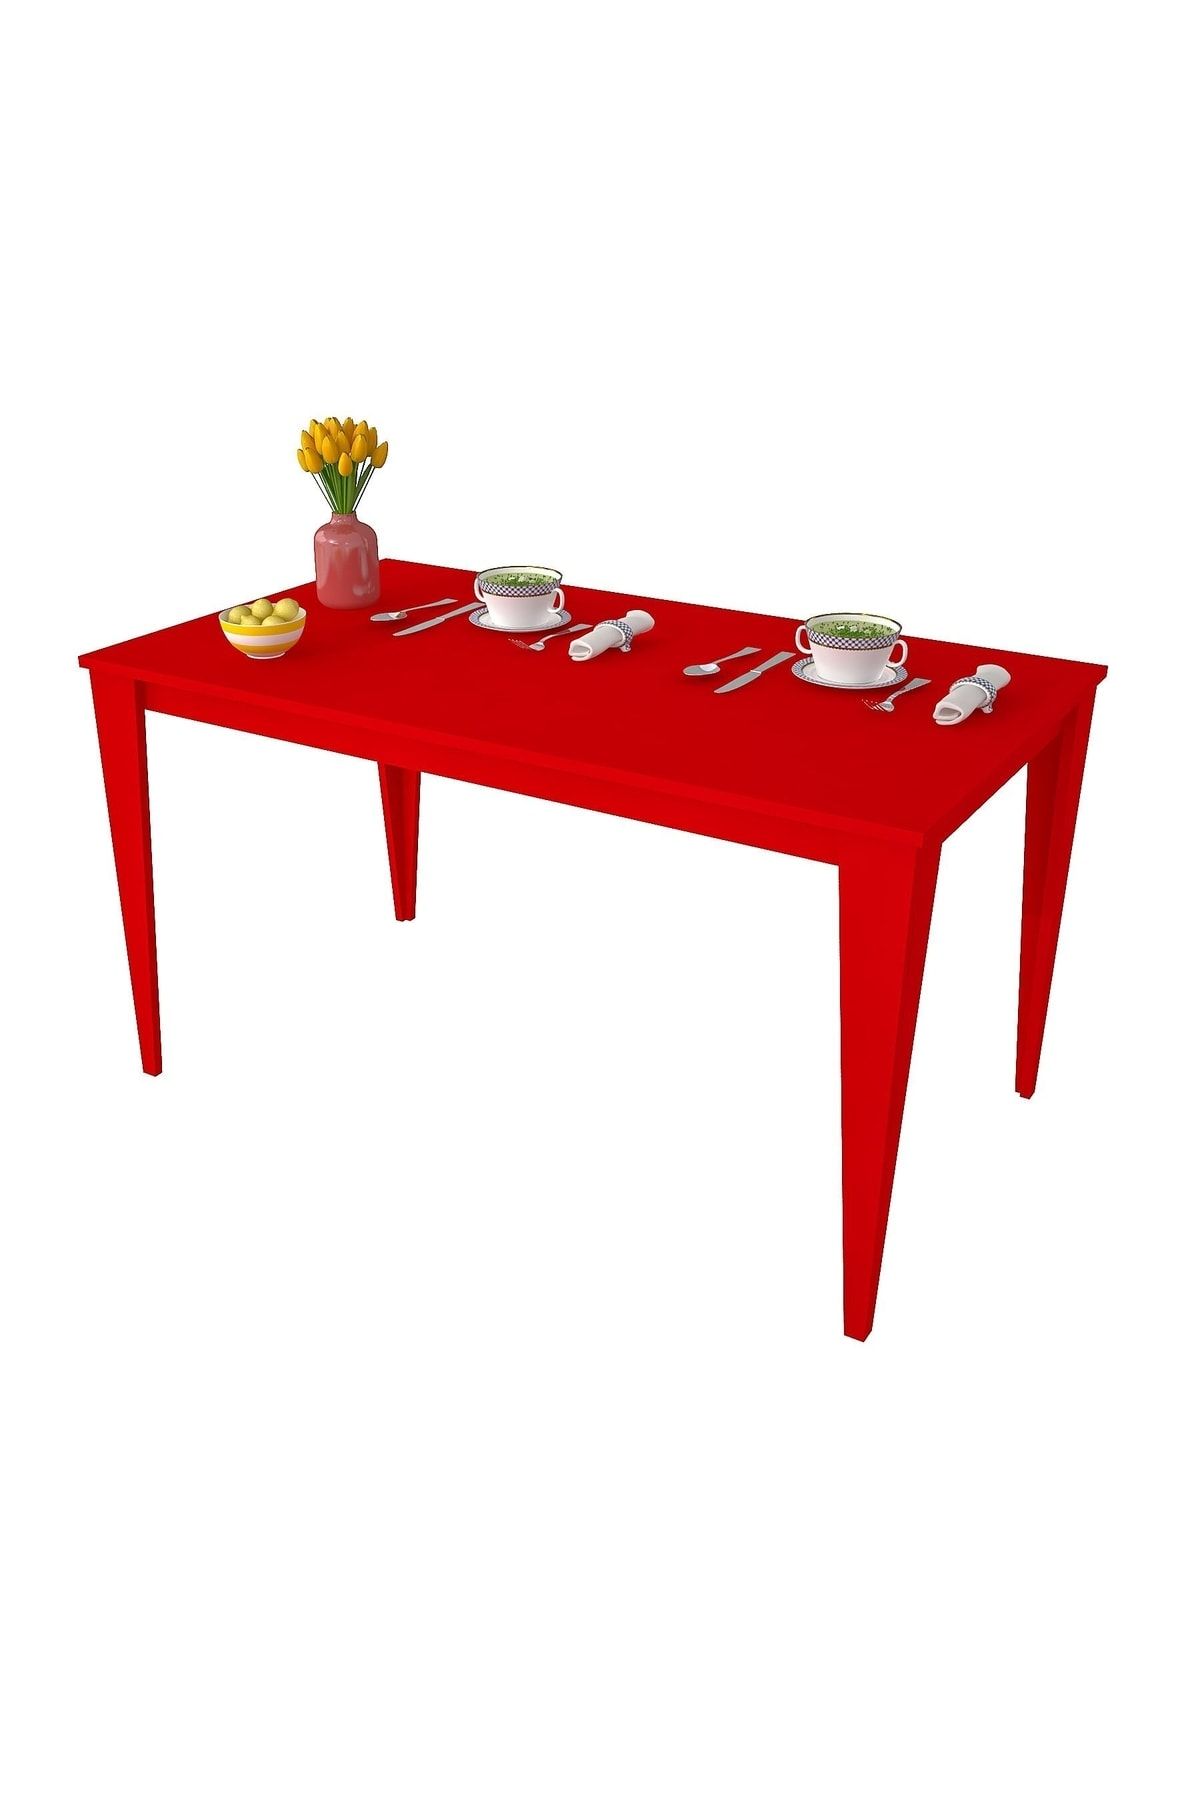 Toptanix Dekormila Asel 130x70 Mutfak Masası Kırmızı